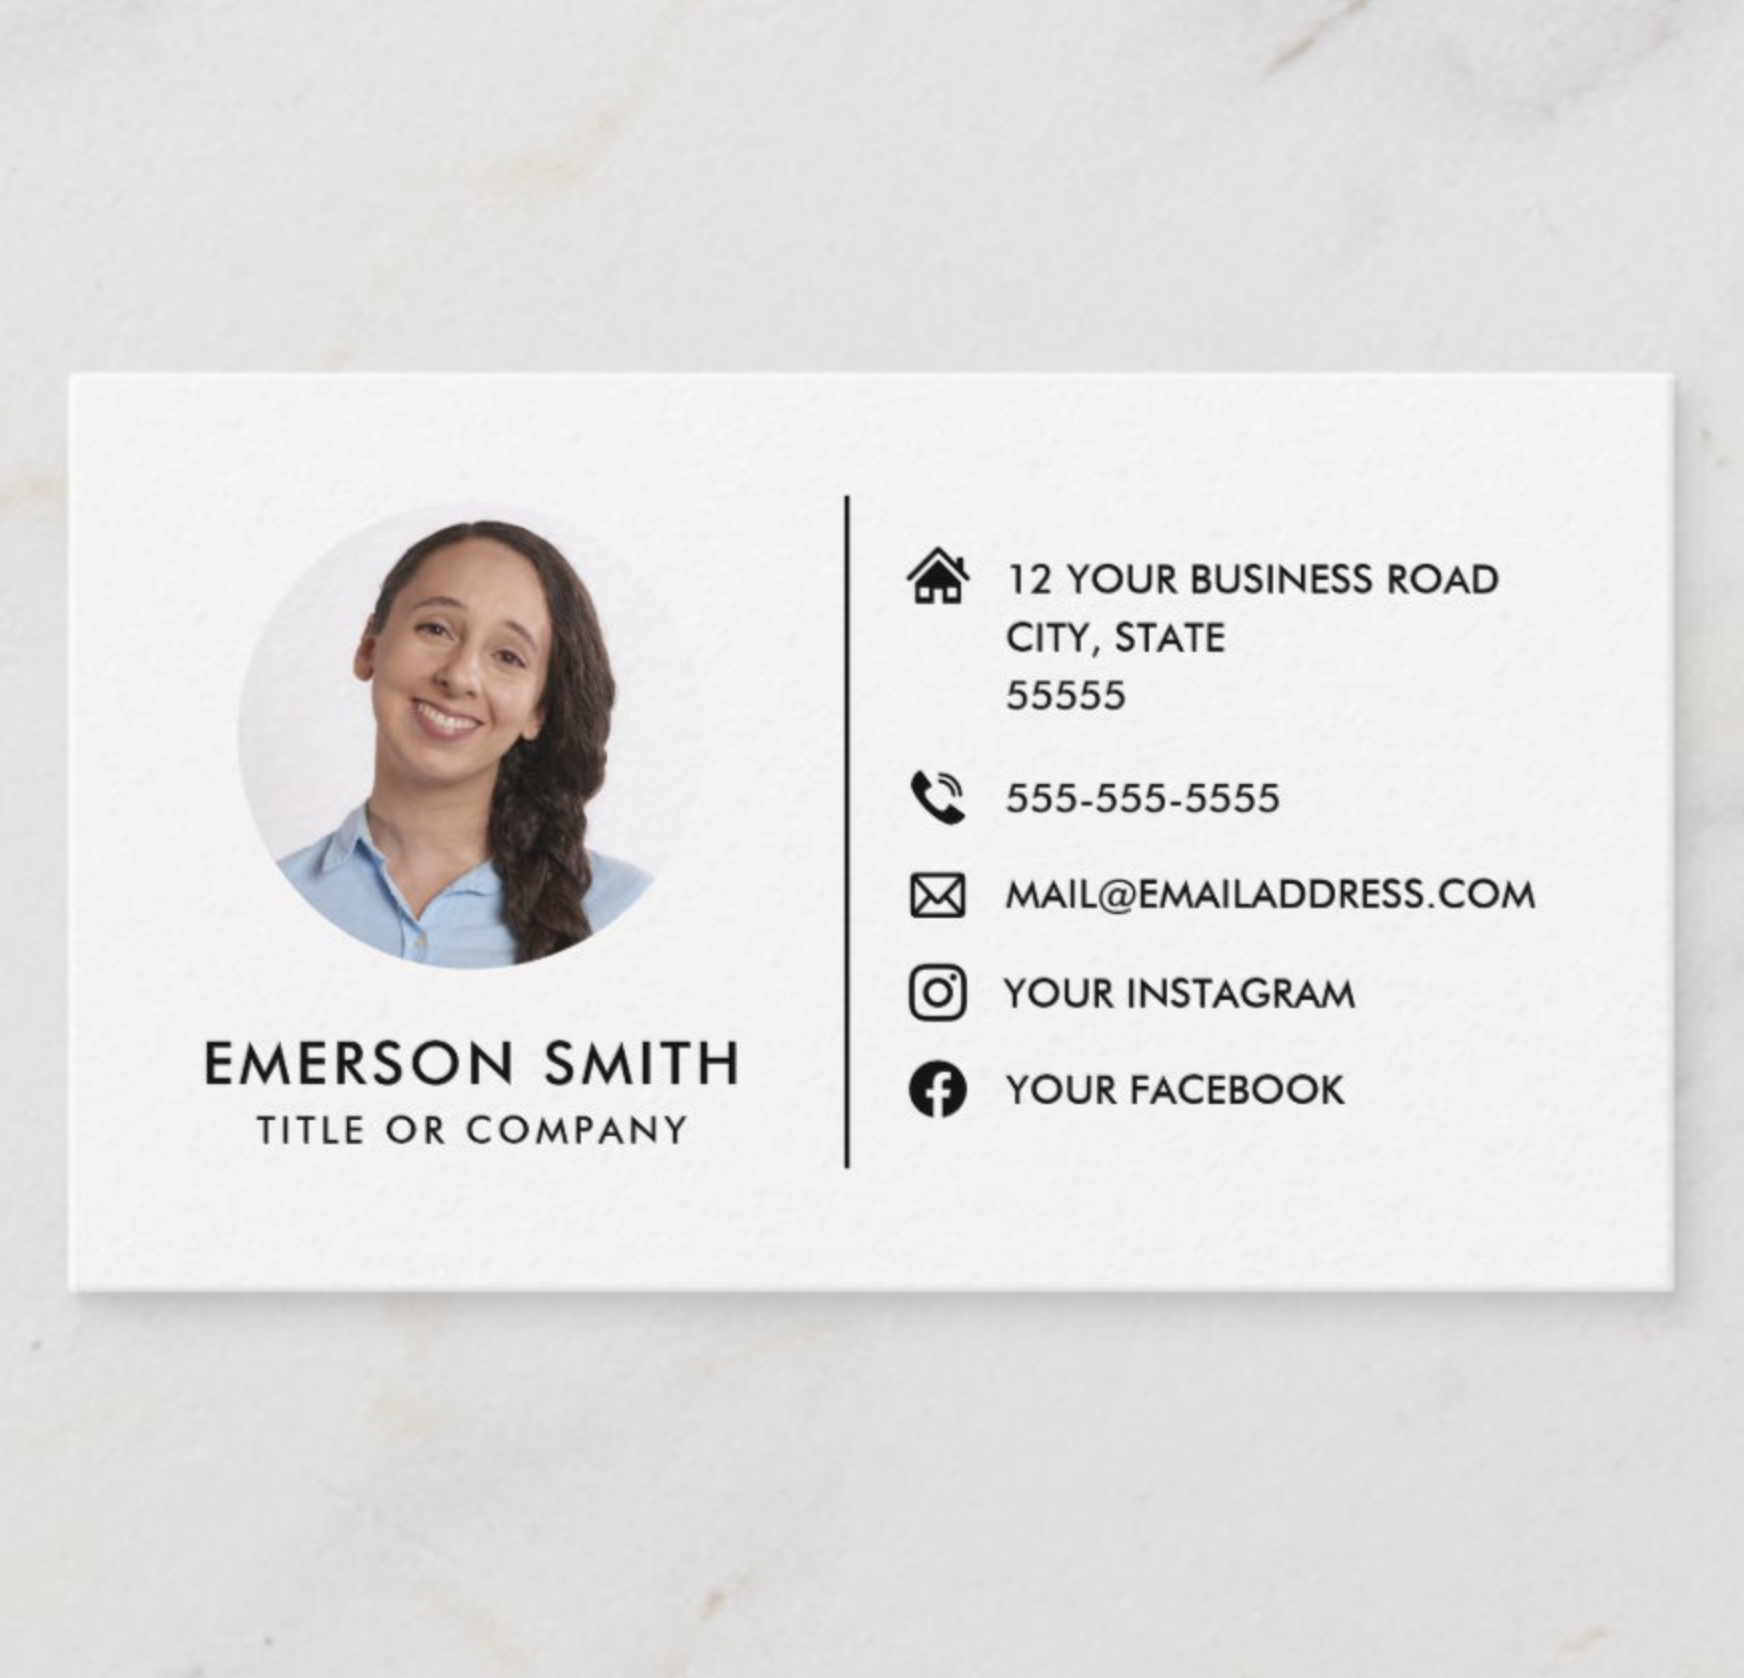 social media handles on business cards 2